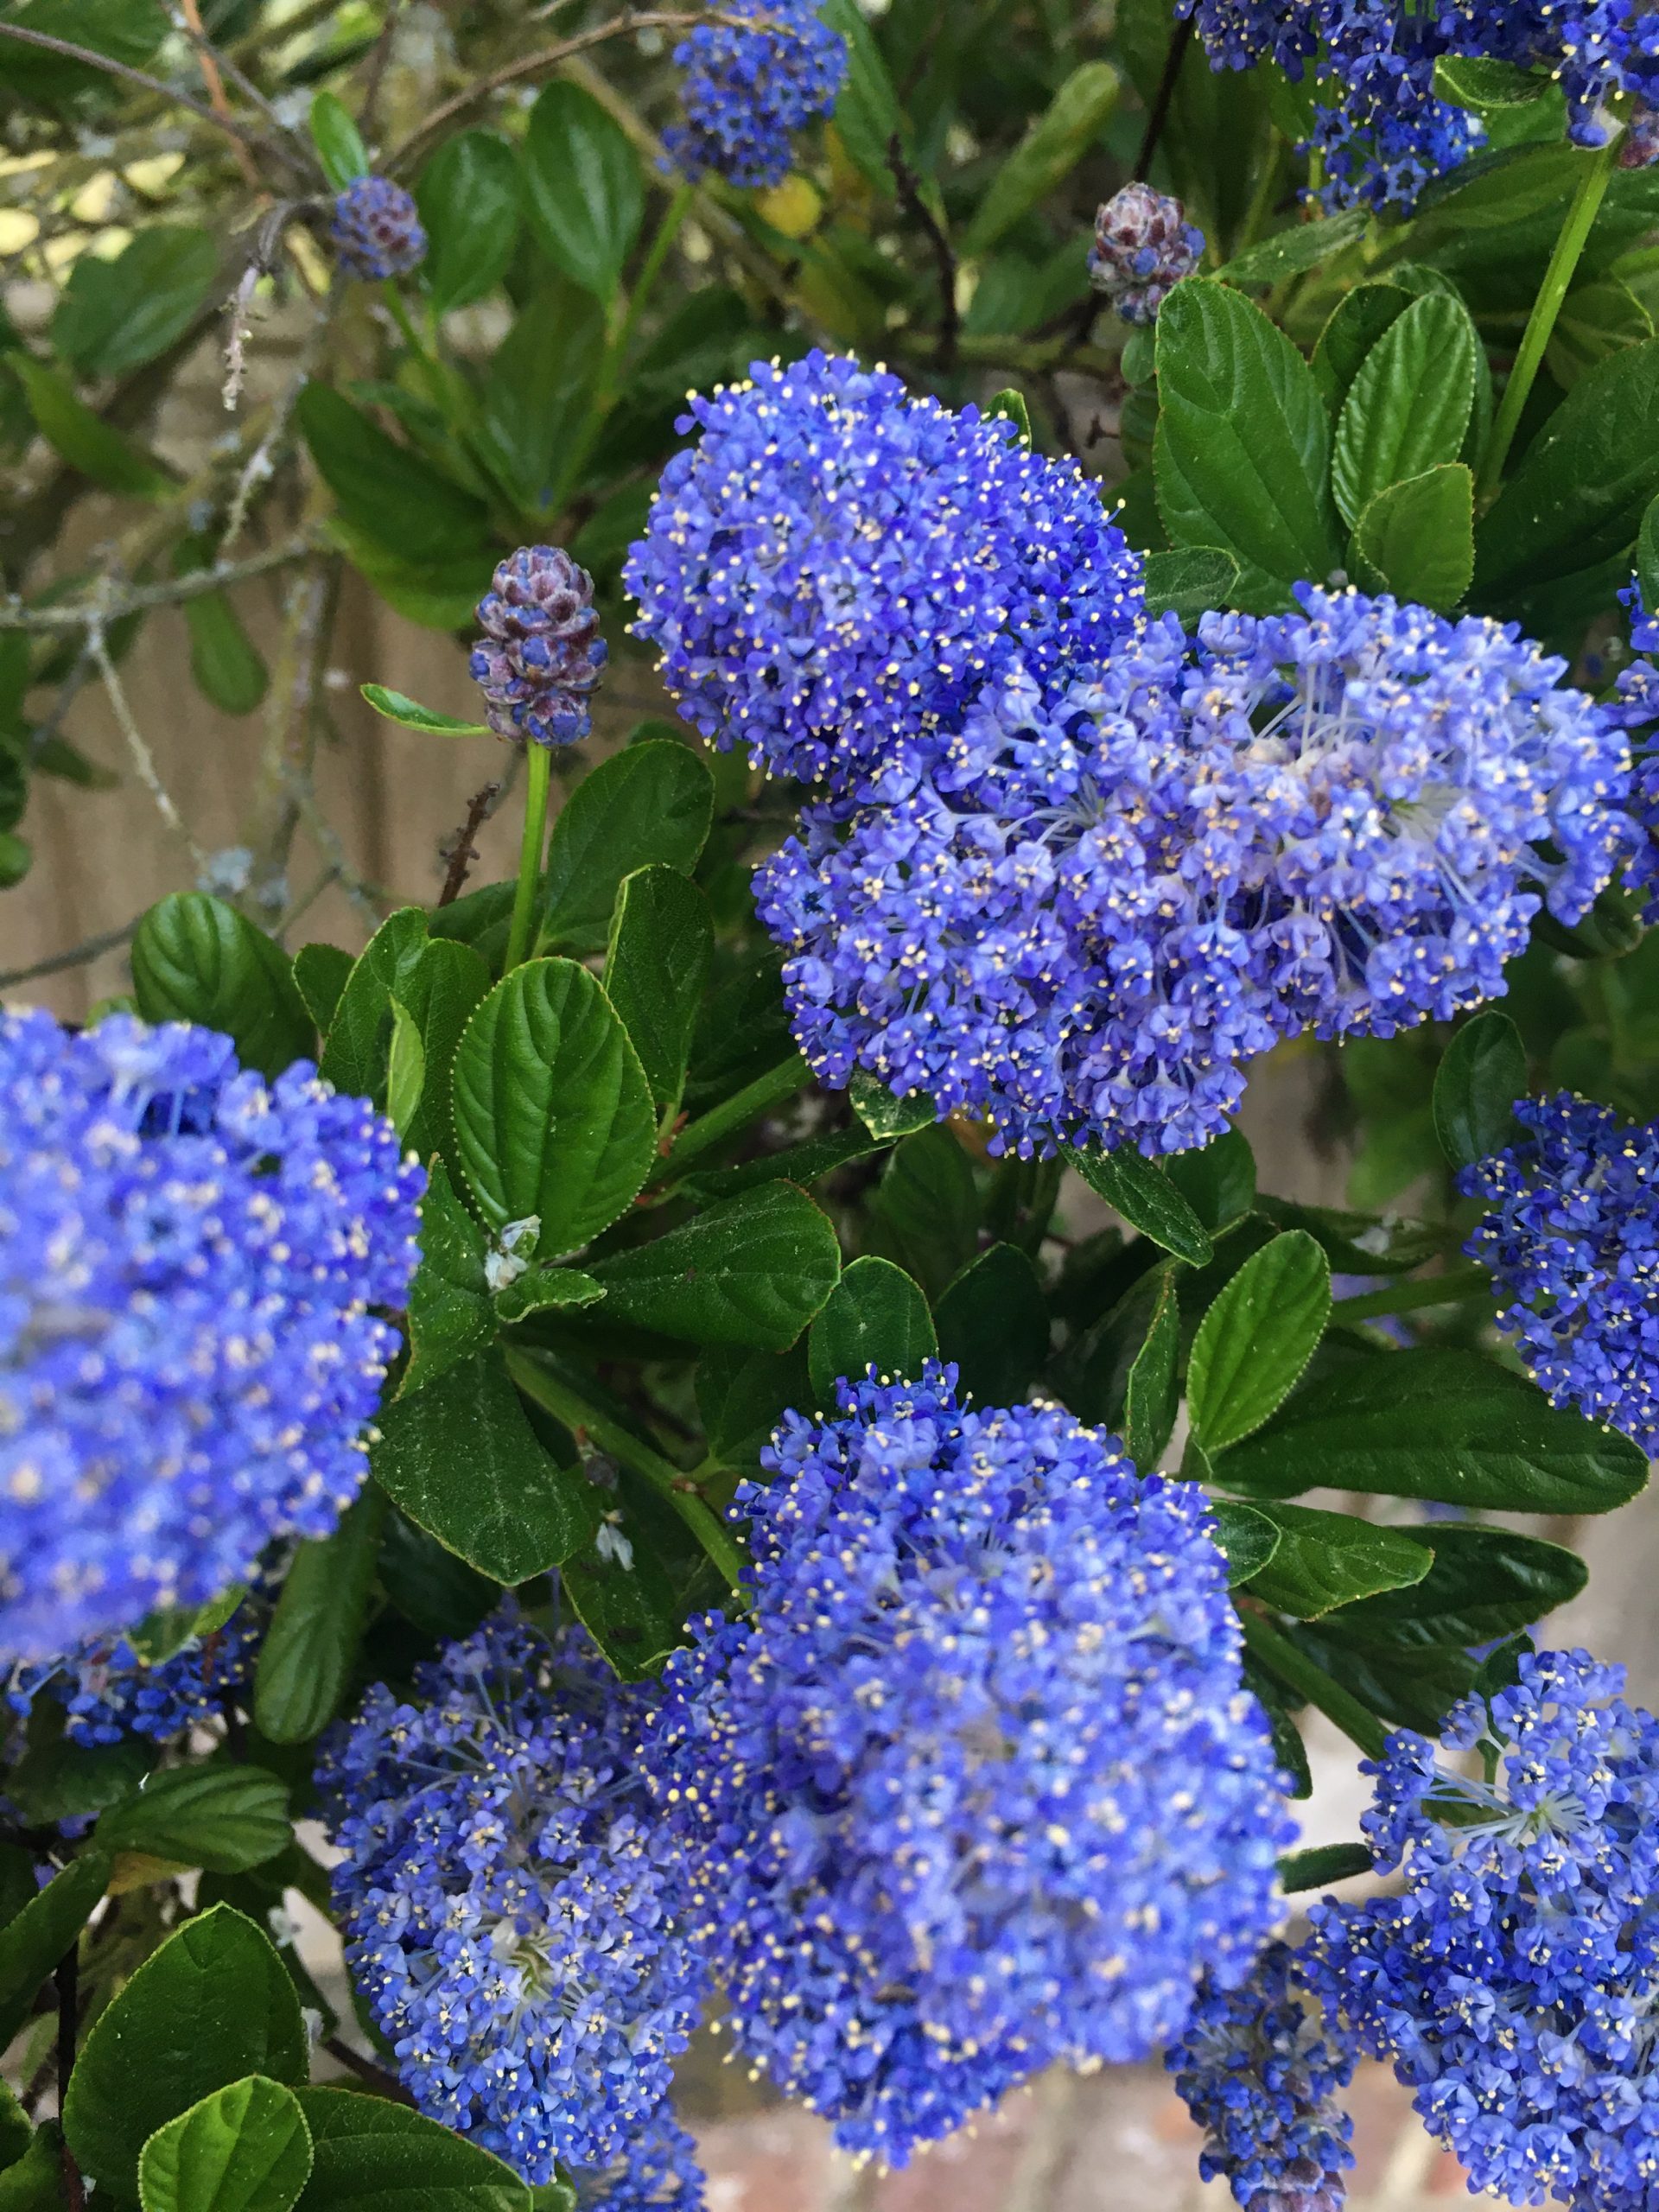 A blue flowering shrub